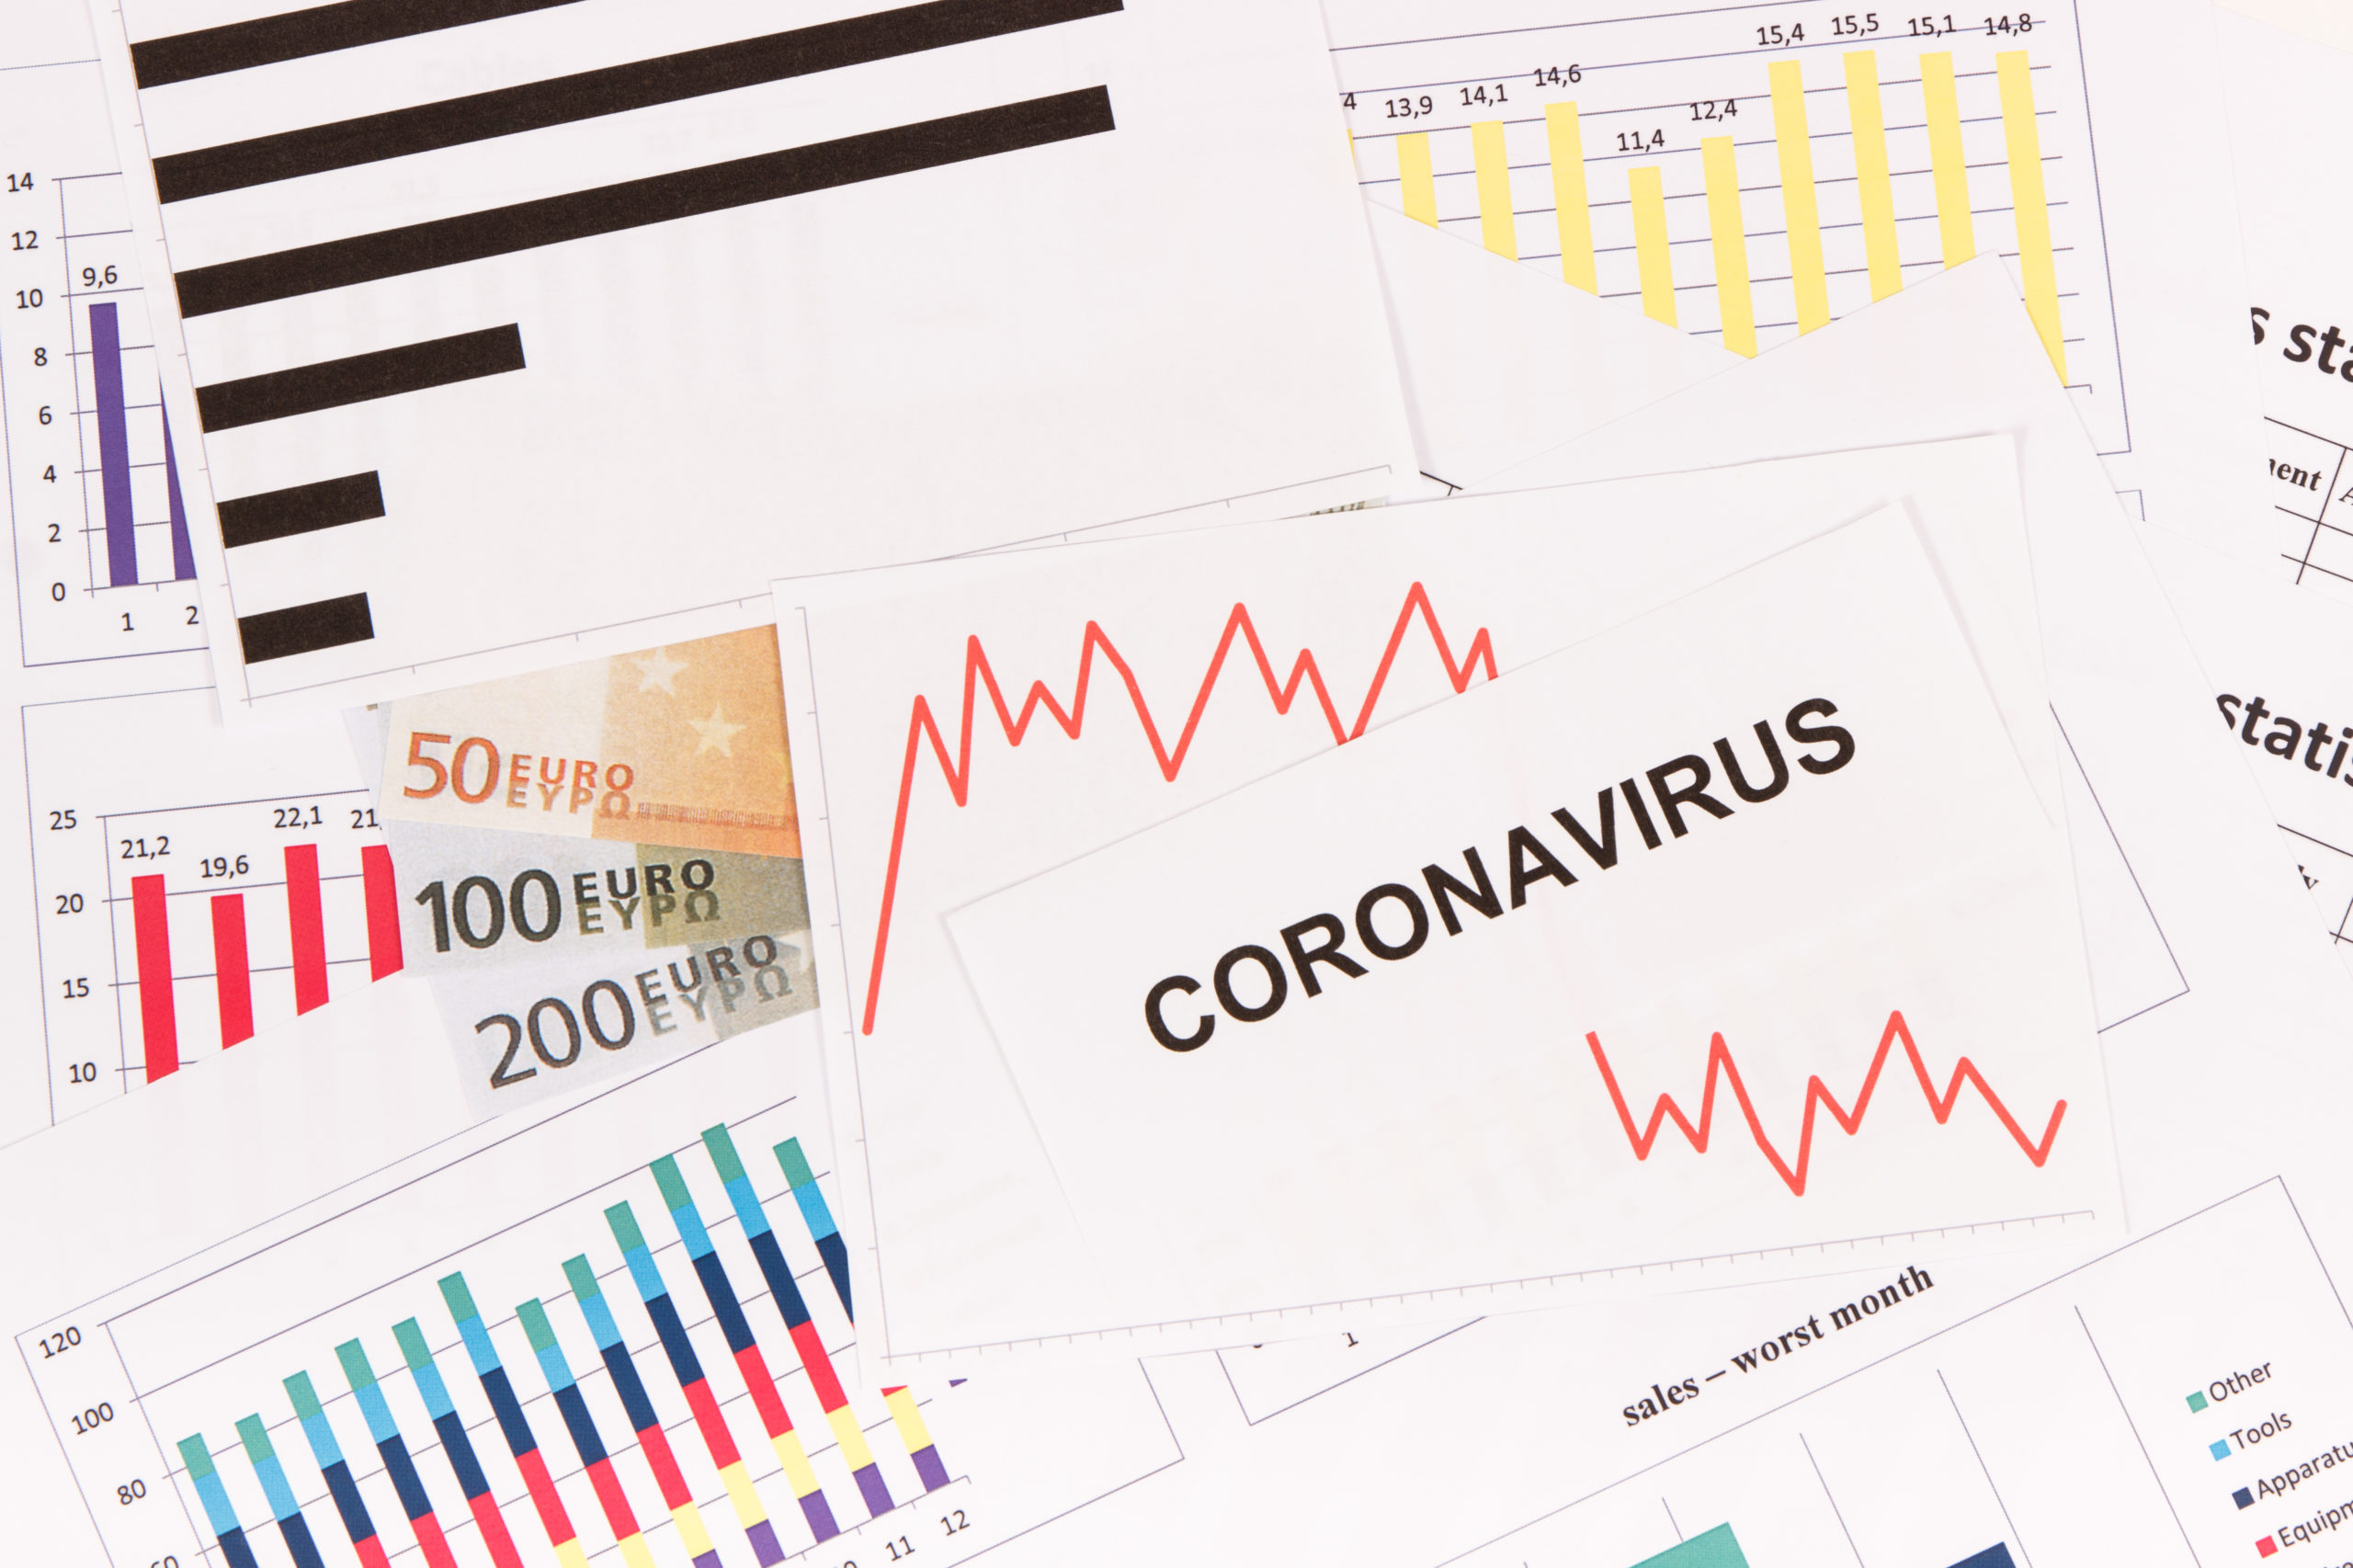 inscription-coronavirus-euro-and-downward-graphs-r-3HPJPWT-scaled.jpg